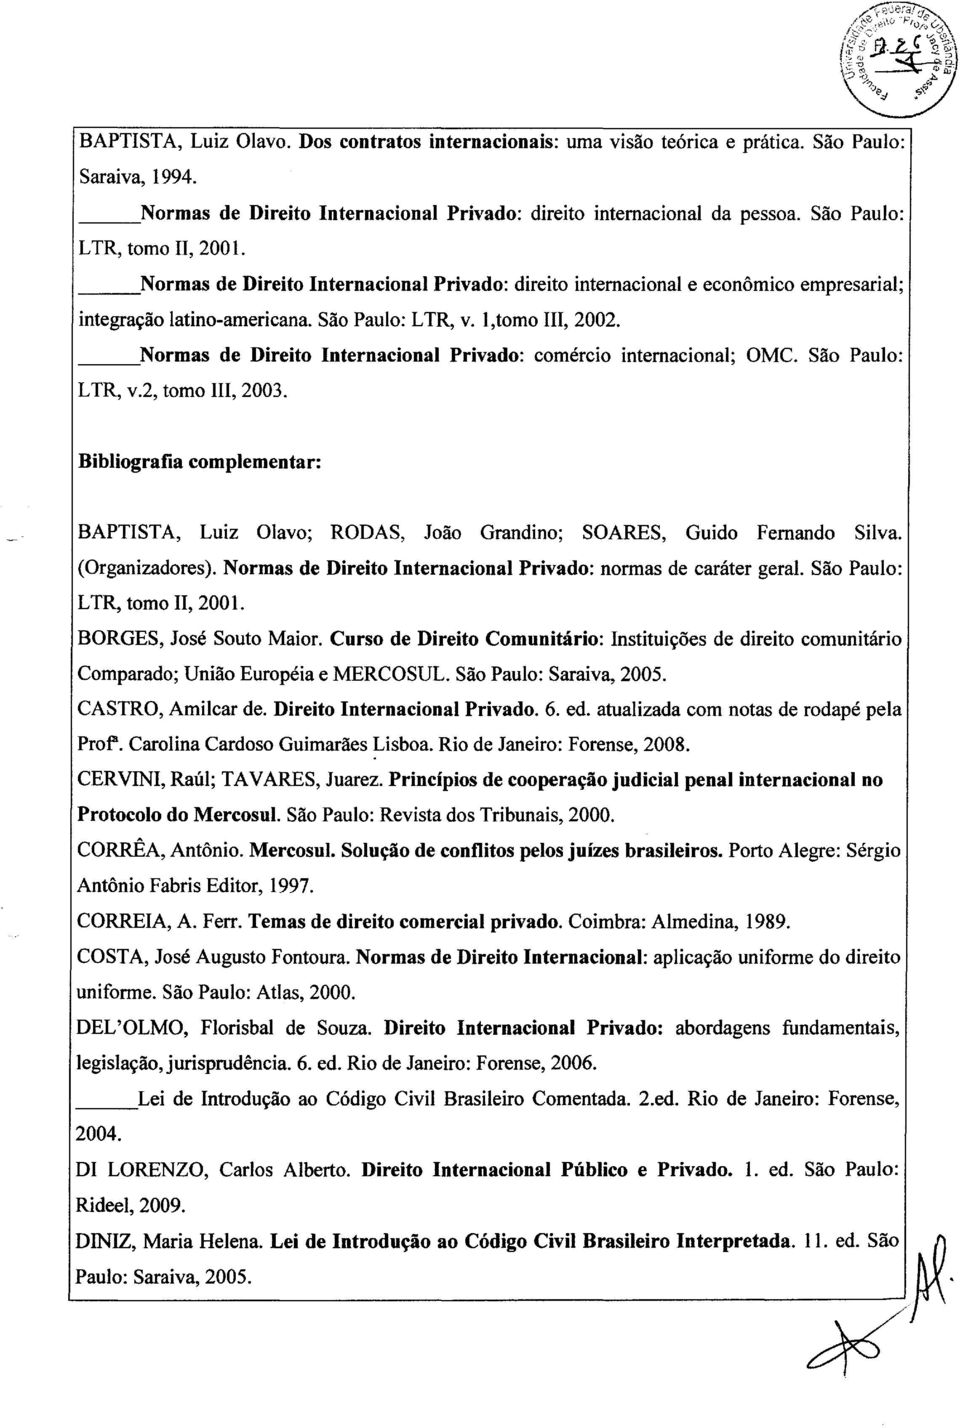 Normas de Direito Internacional Privado: comercio internacional; OMC. Sao Paulo: LTR, v.2, tomo III, 2003.